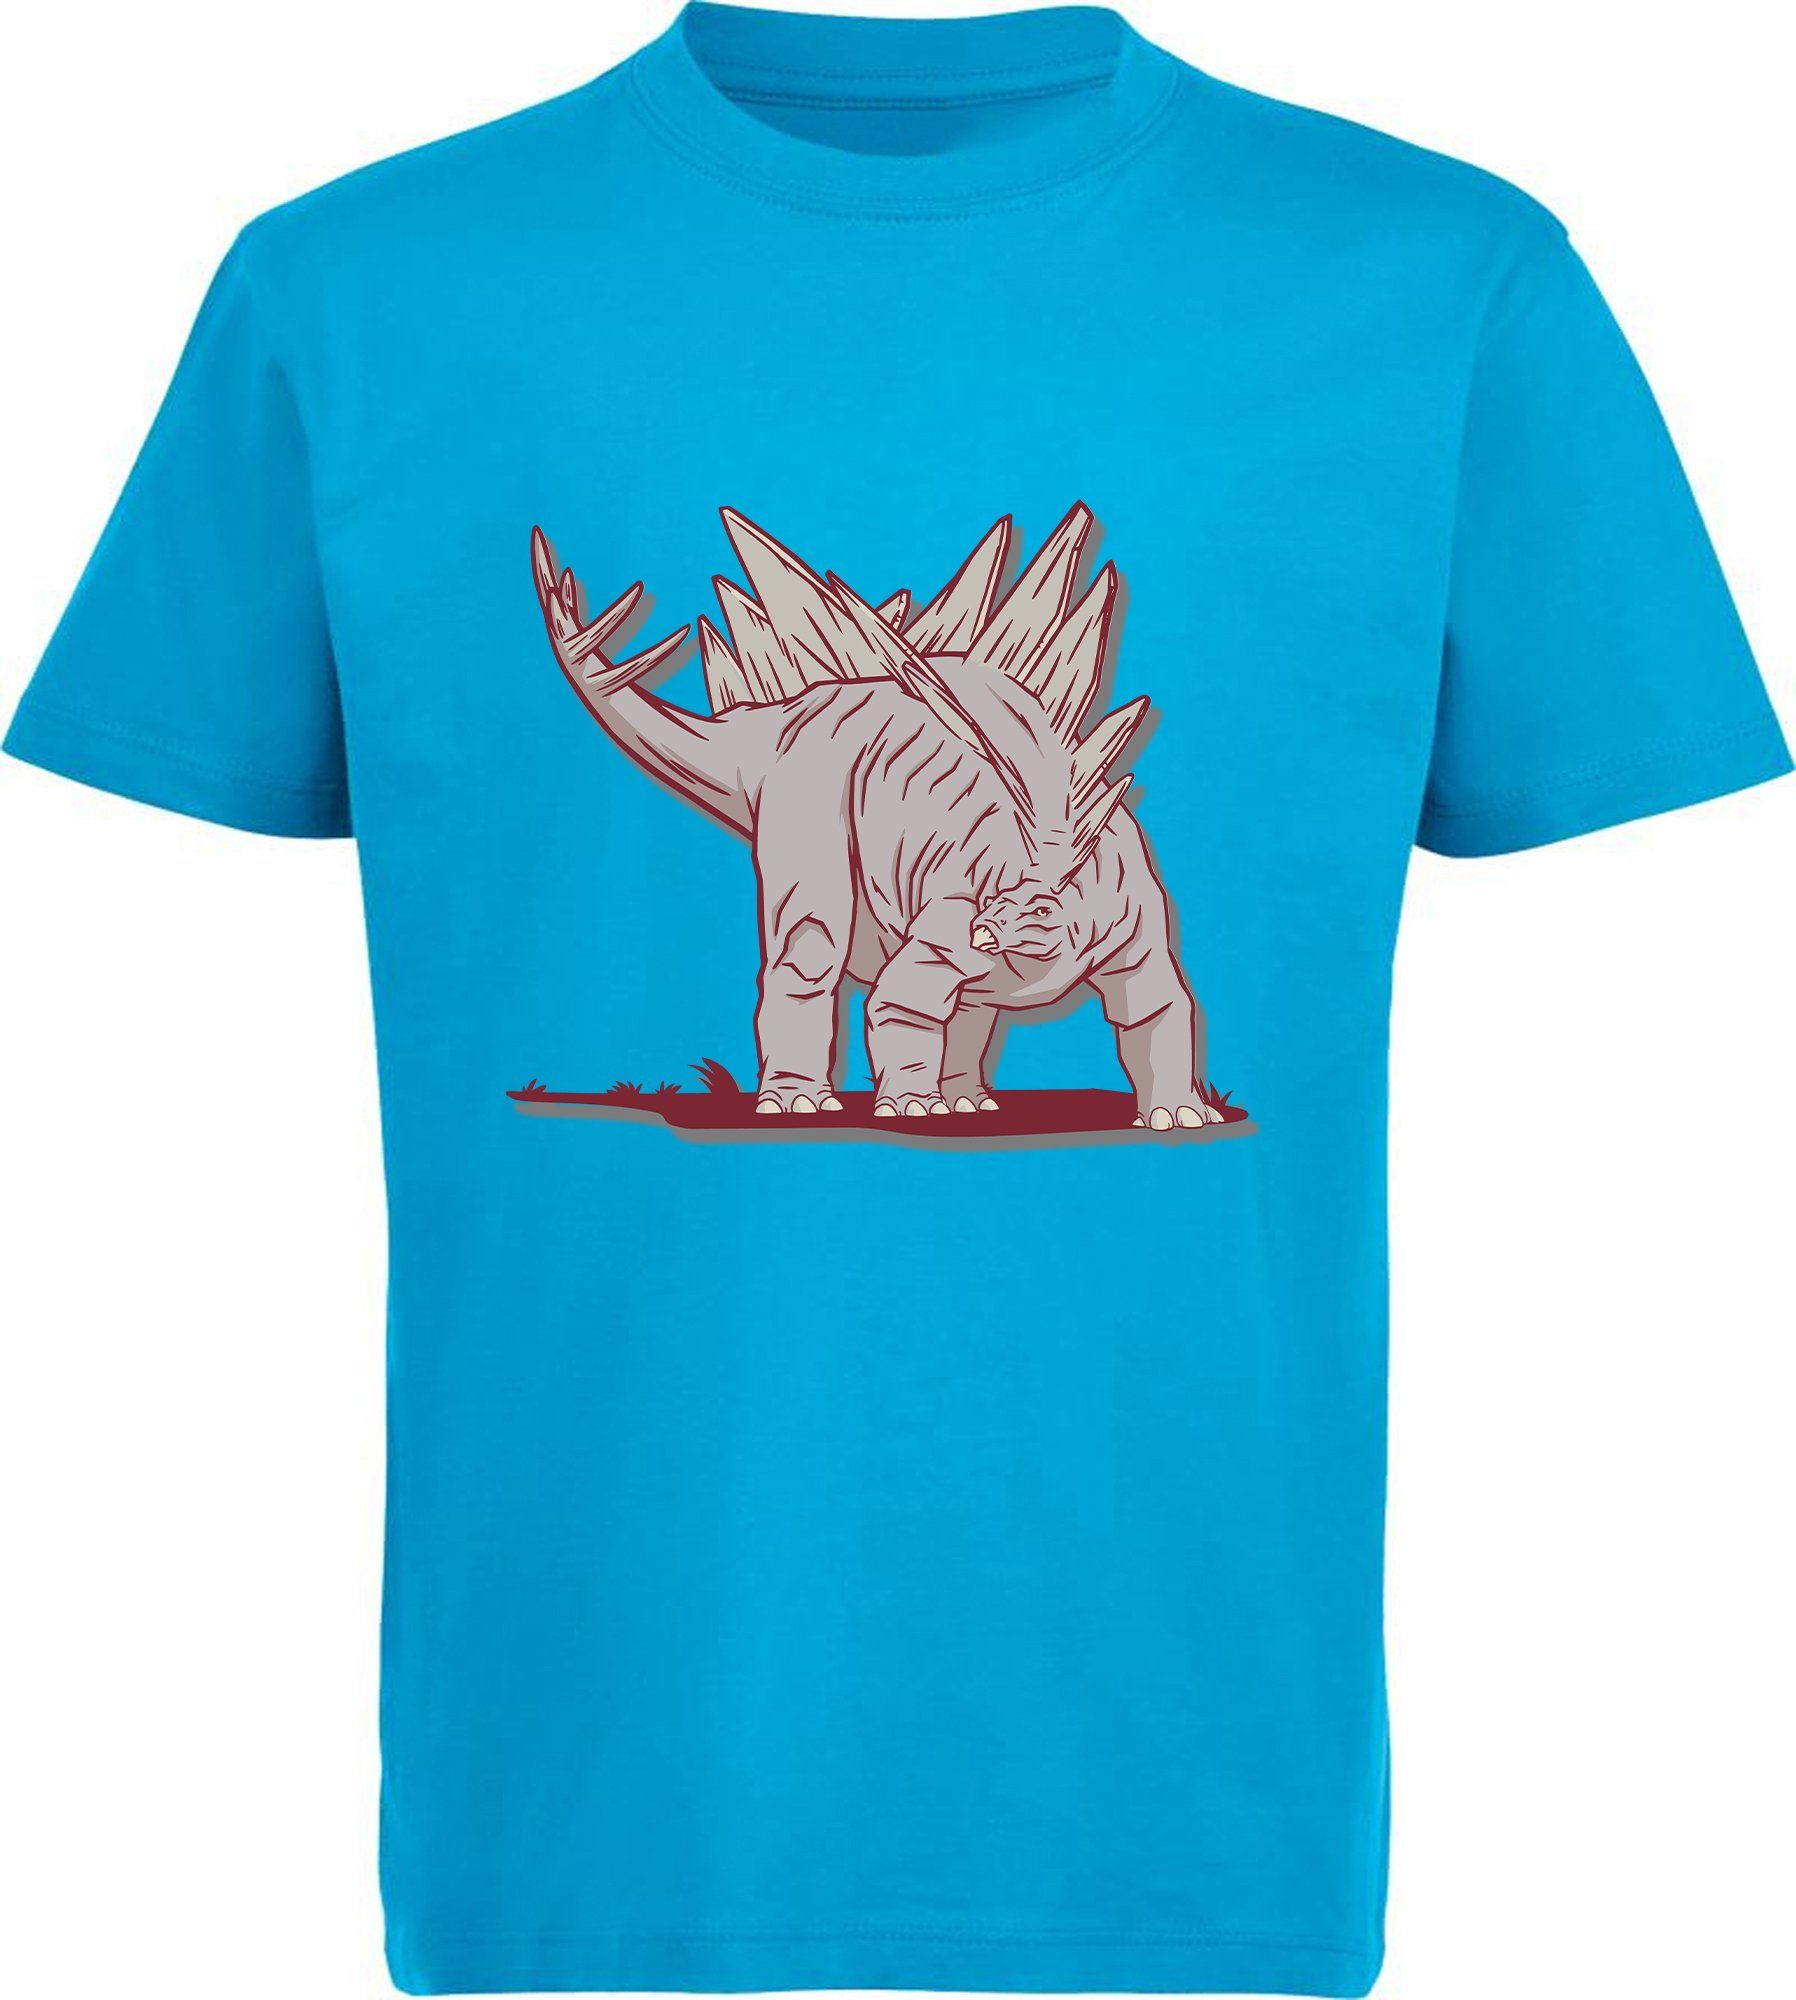 mit rot, blau, weiß, schwarz, Print-Shirt aqua T-Shirt bedrucktes Dino, Stegosaurus Baumwollshirt mit i88 Kinder MyDesign24 blau